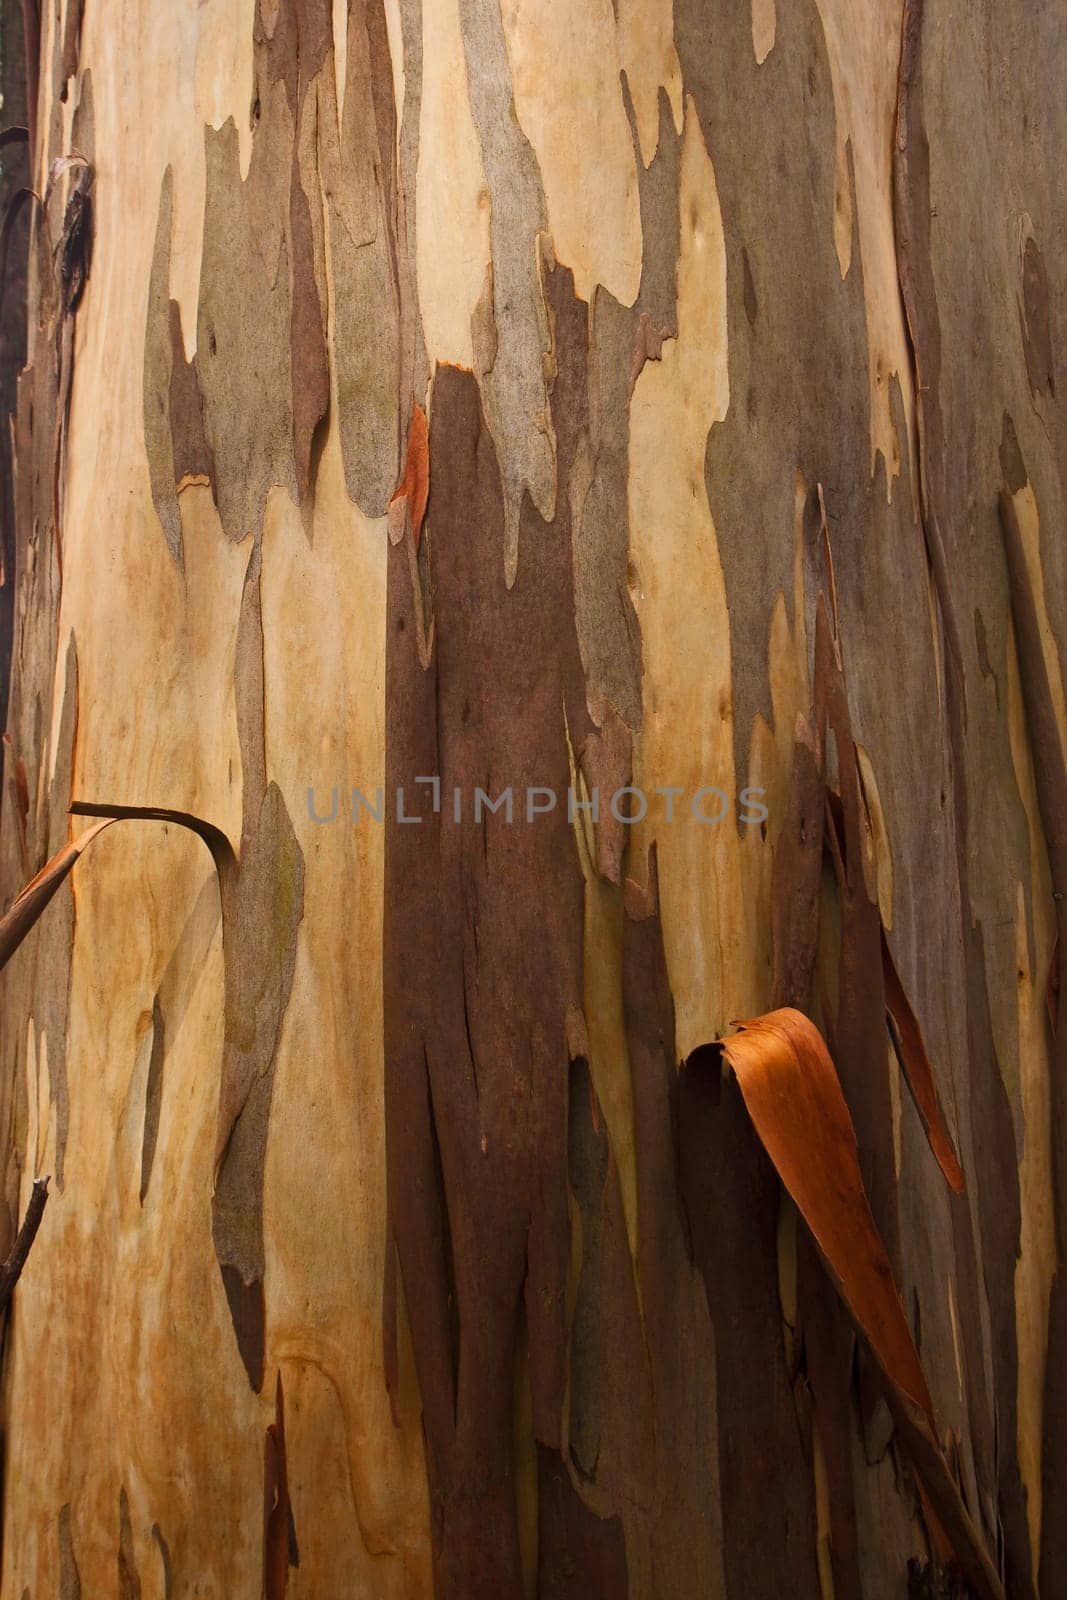 Eucalyptus tree trunk 14246 by kobus_peche